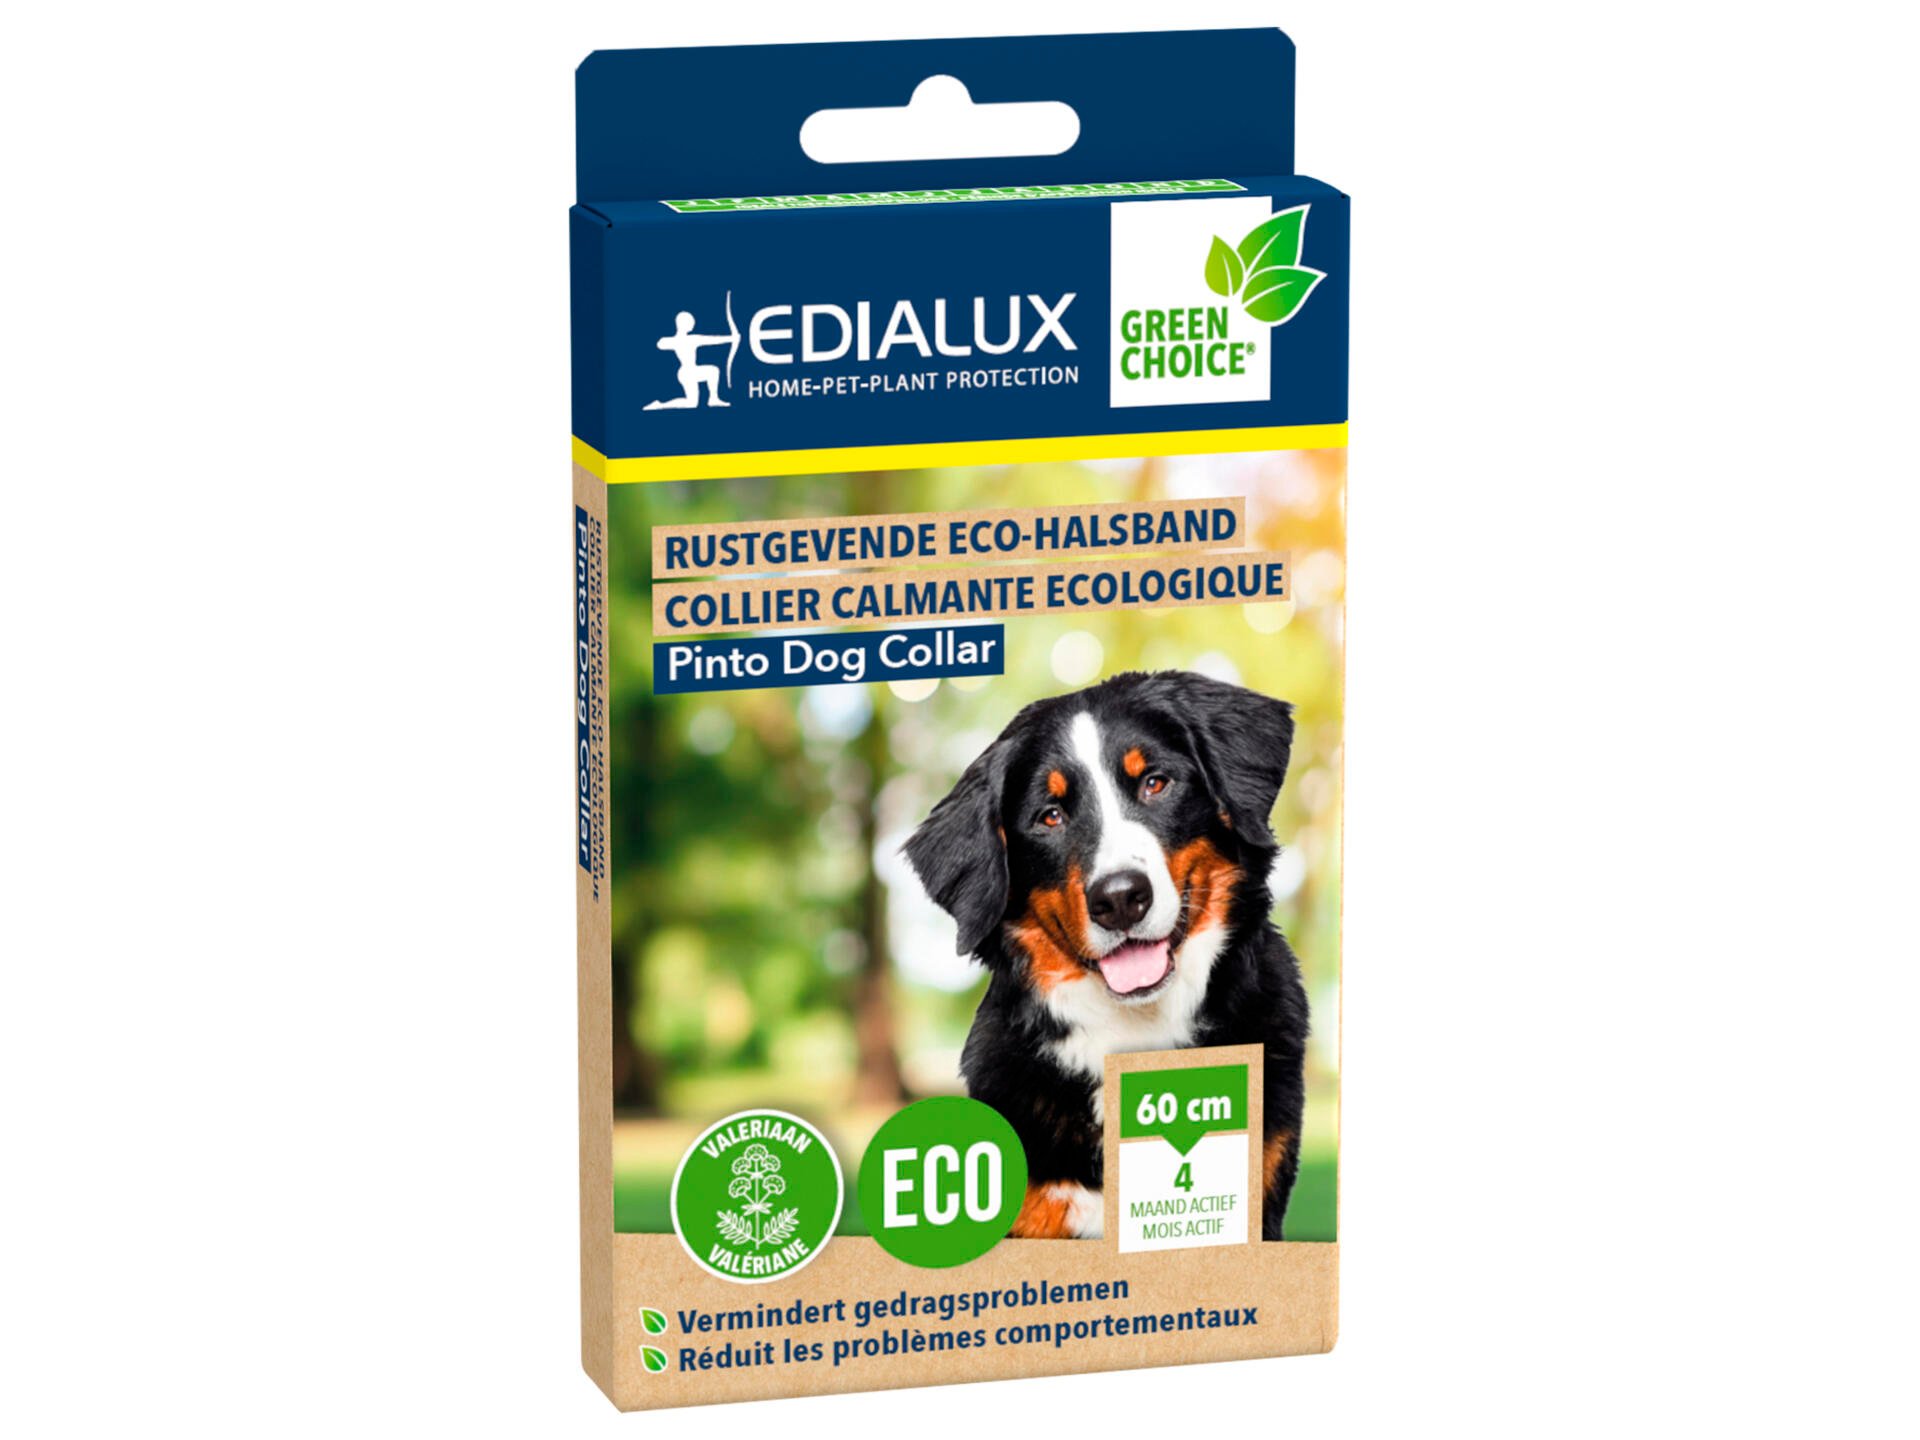 Edialux Pinto Dog Collar rustgevende eco-halsband